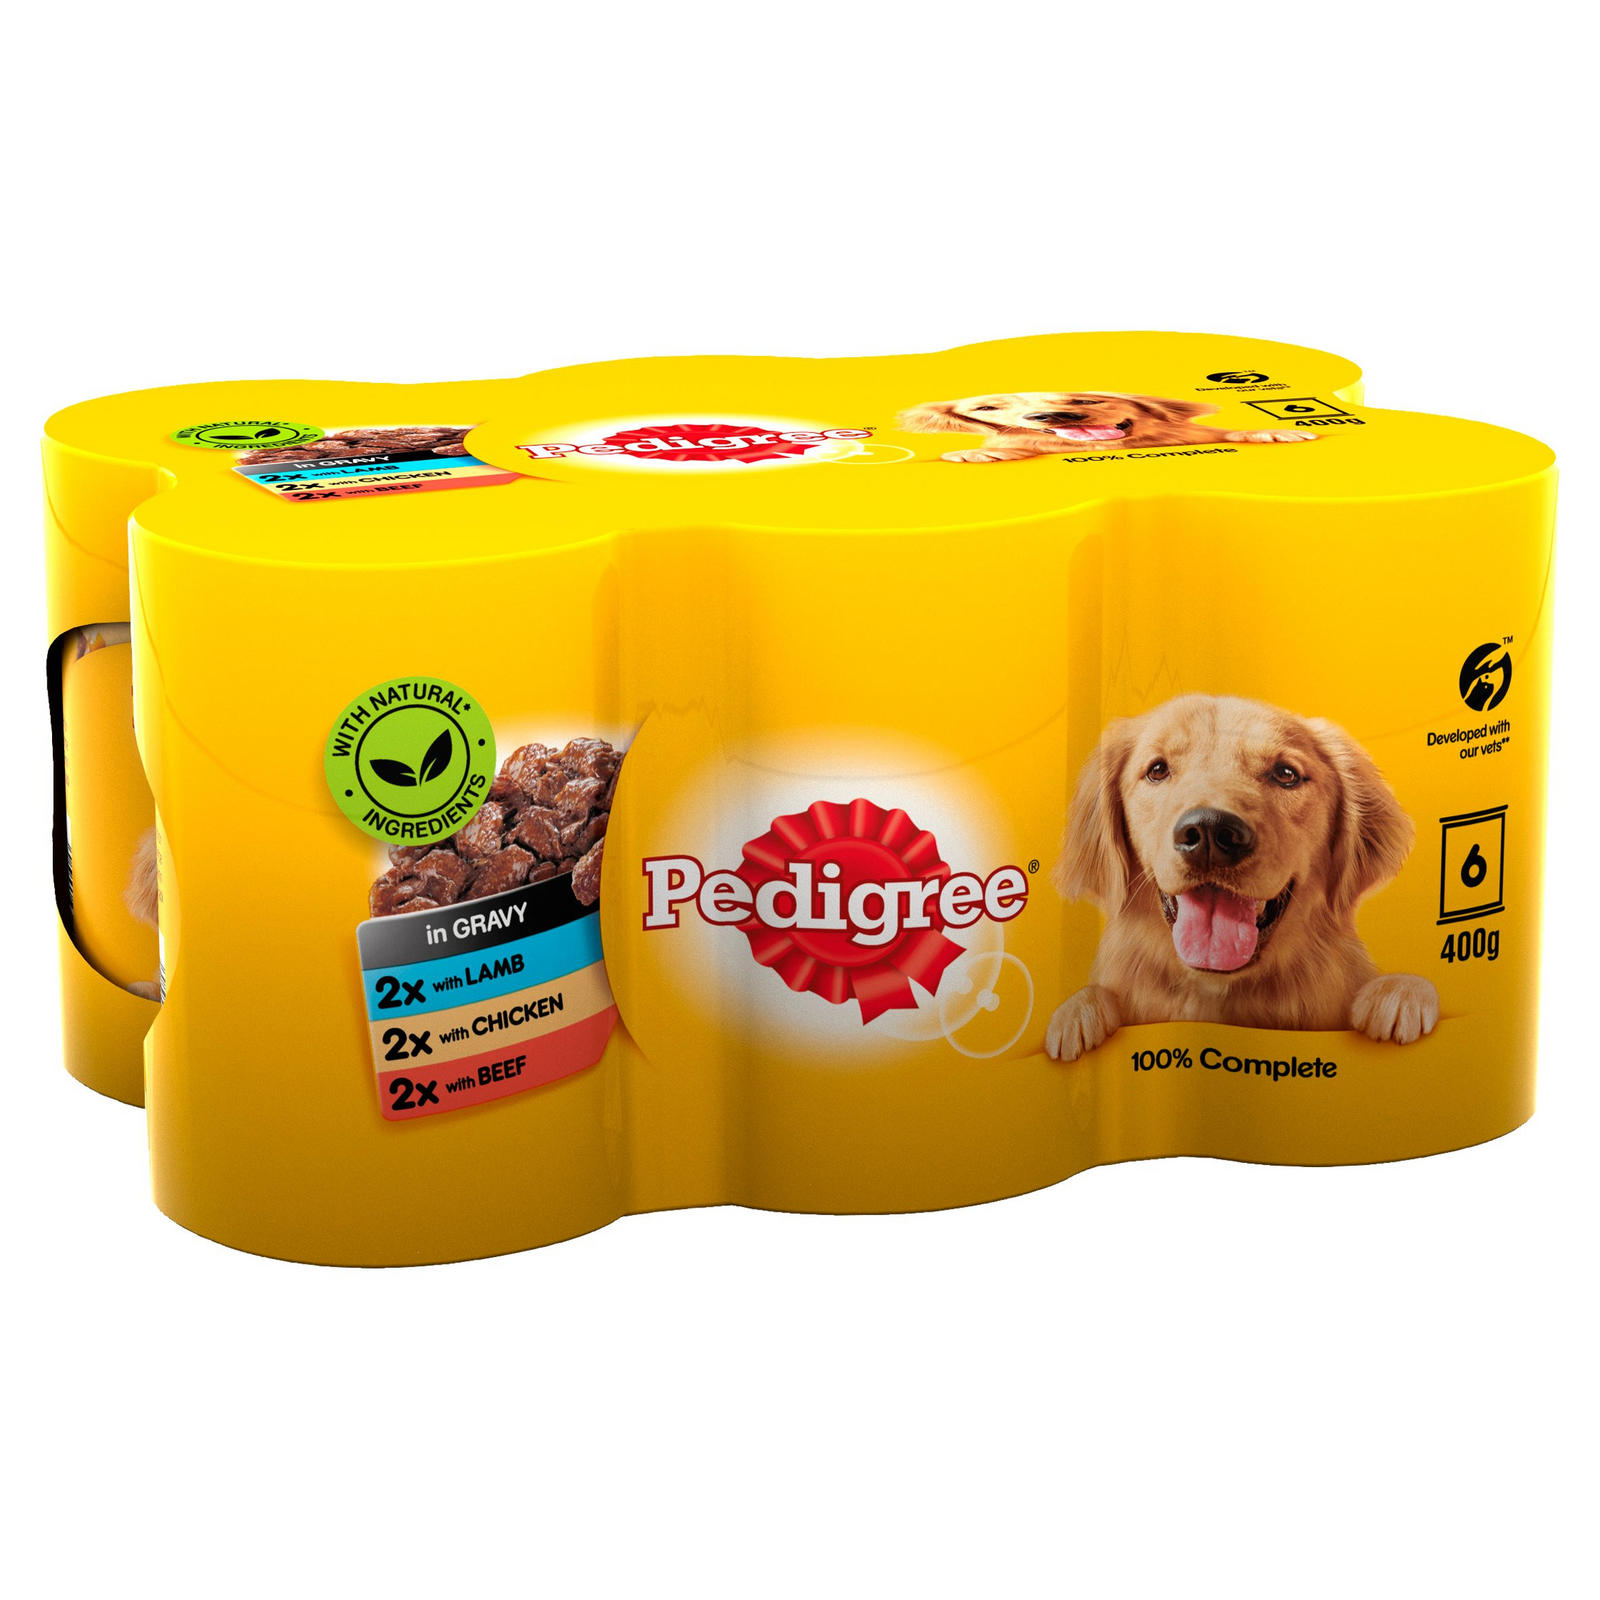 Pedigree Wet Dog Food Tins Mixed Selection in Gravy 6 x 400g Dog Food